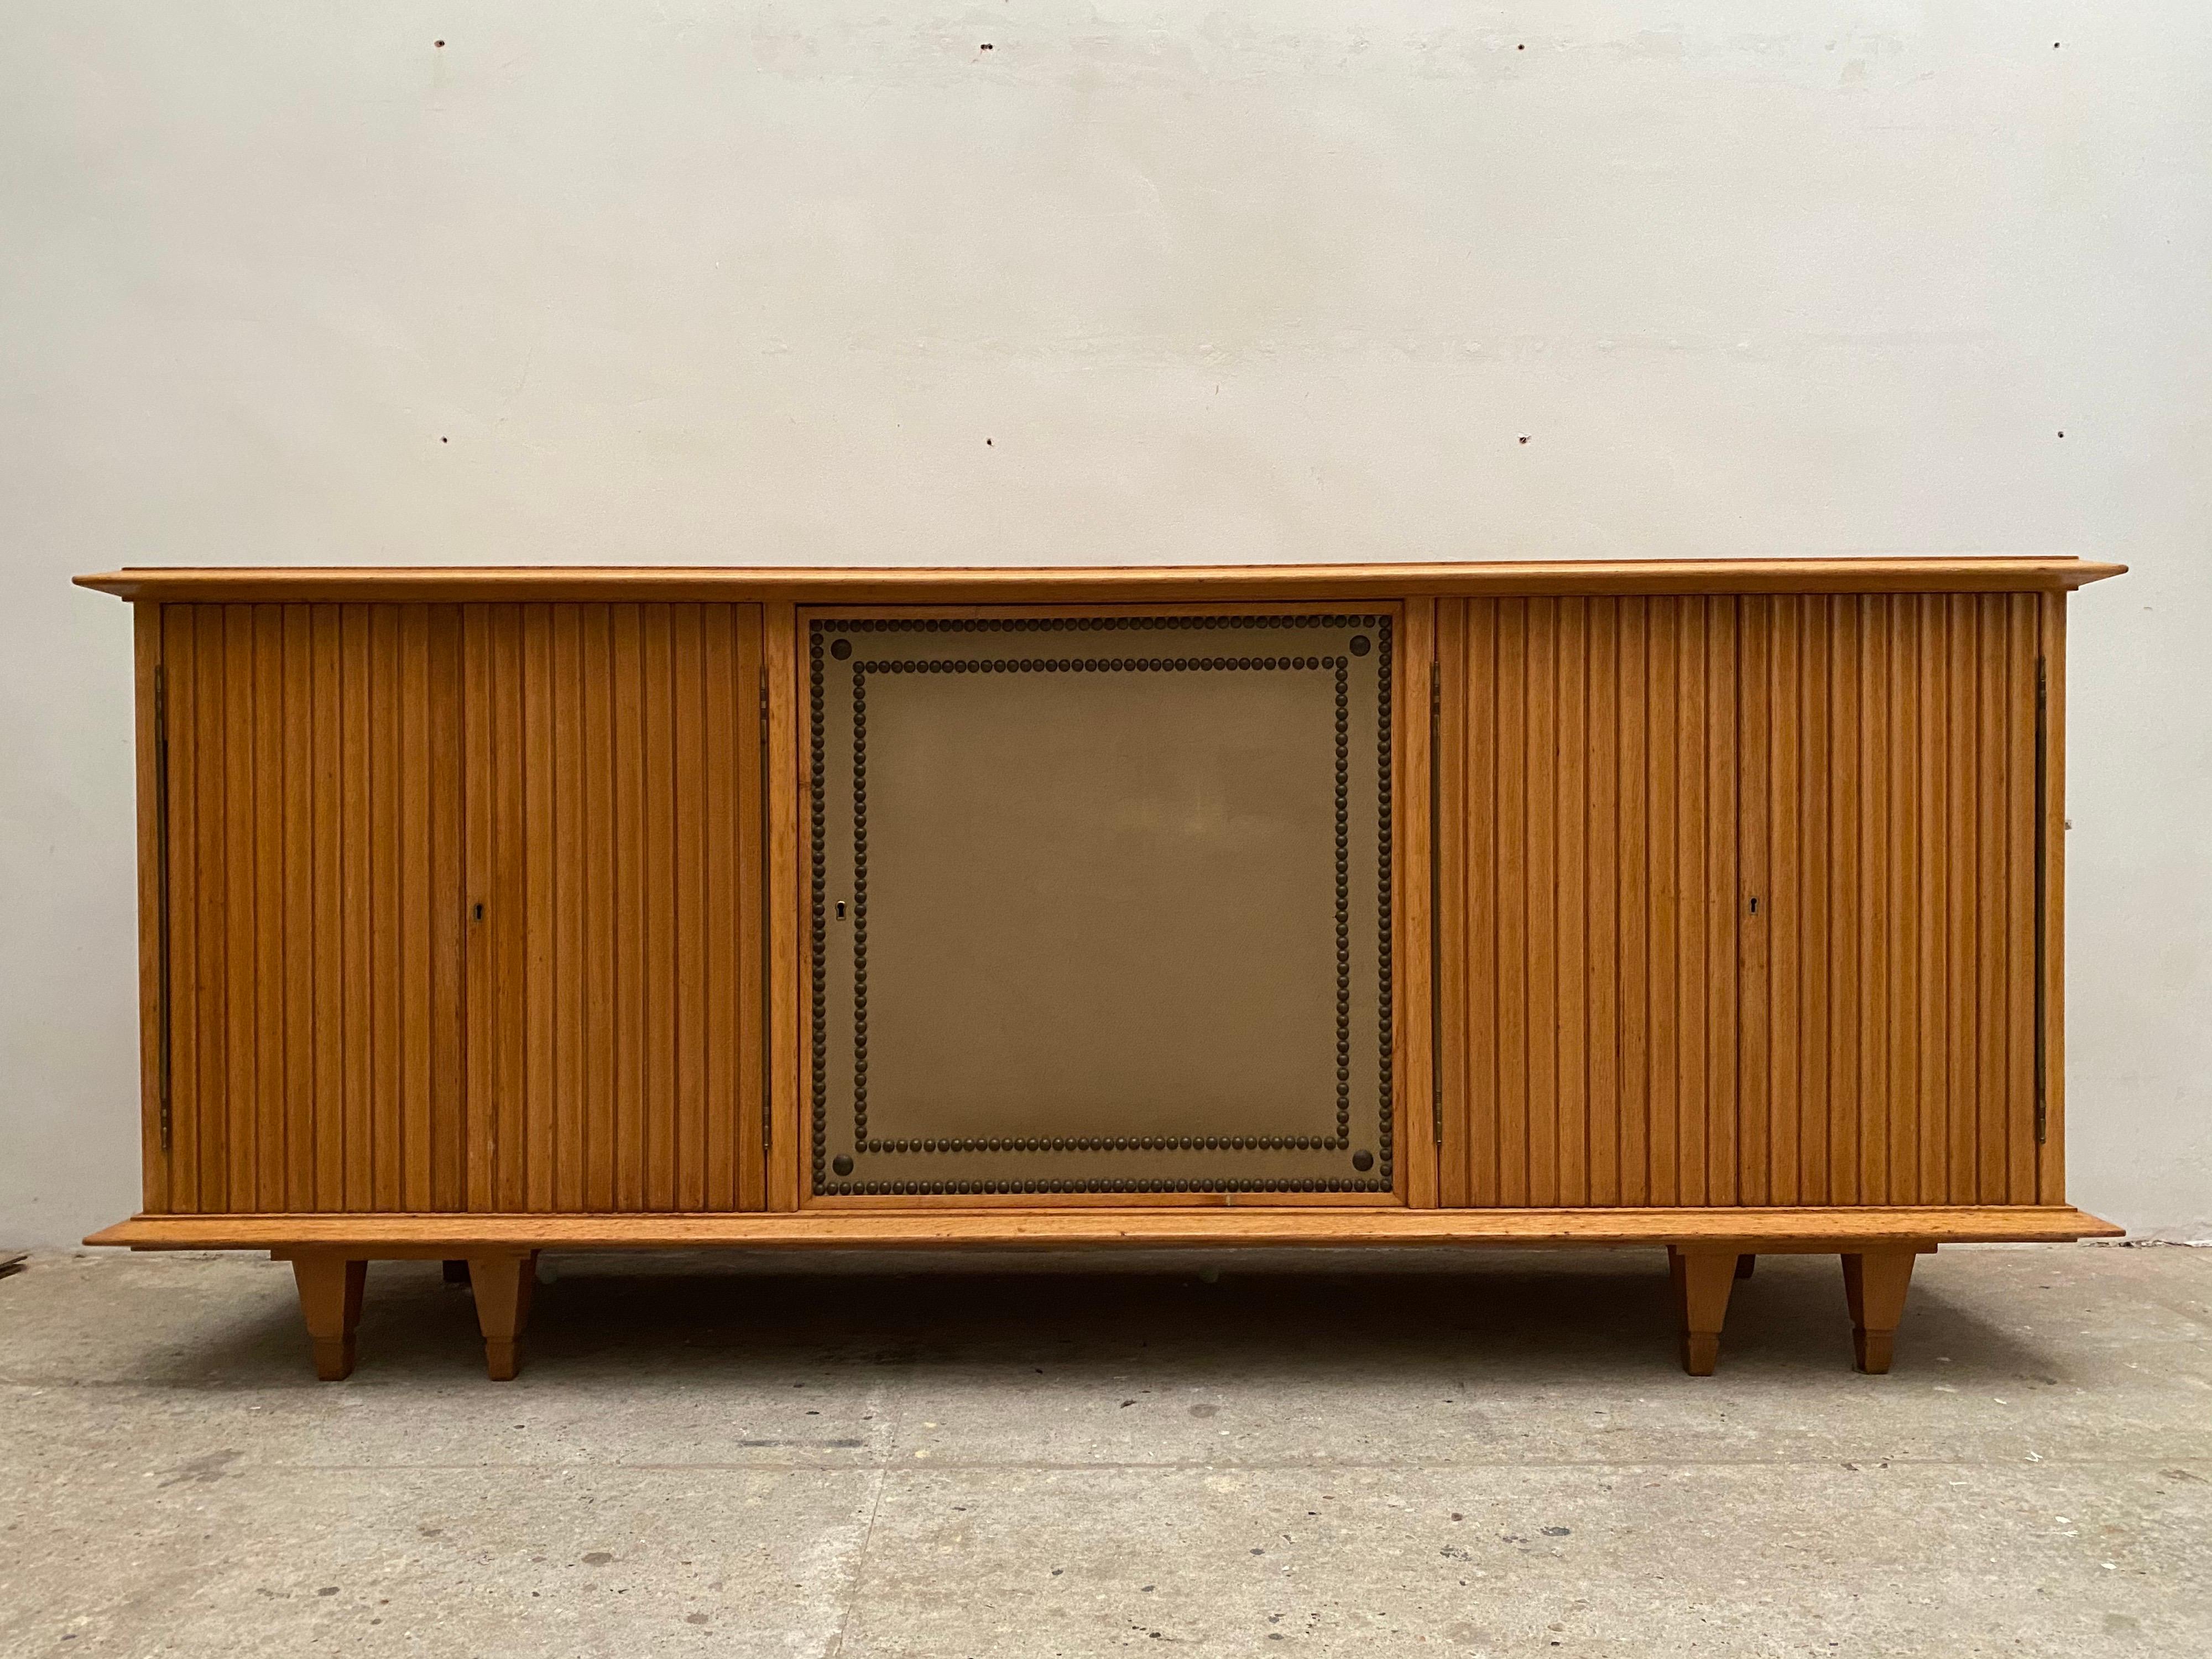 Art Deco Brutalist Large Sideboard with Slatted Front 1940s De Coene, Belgium For Sale